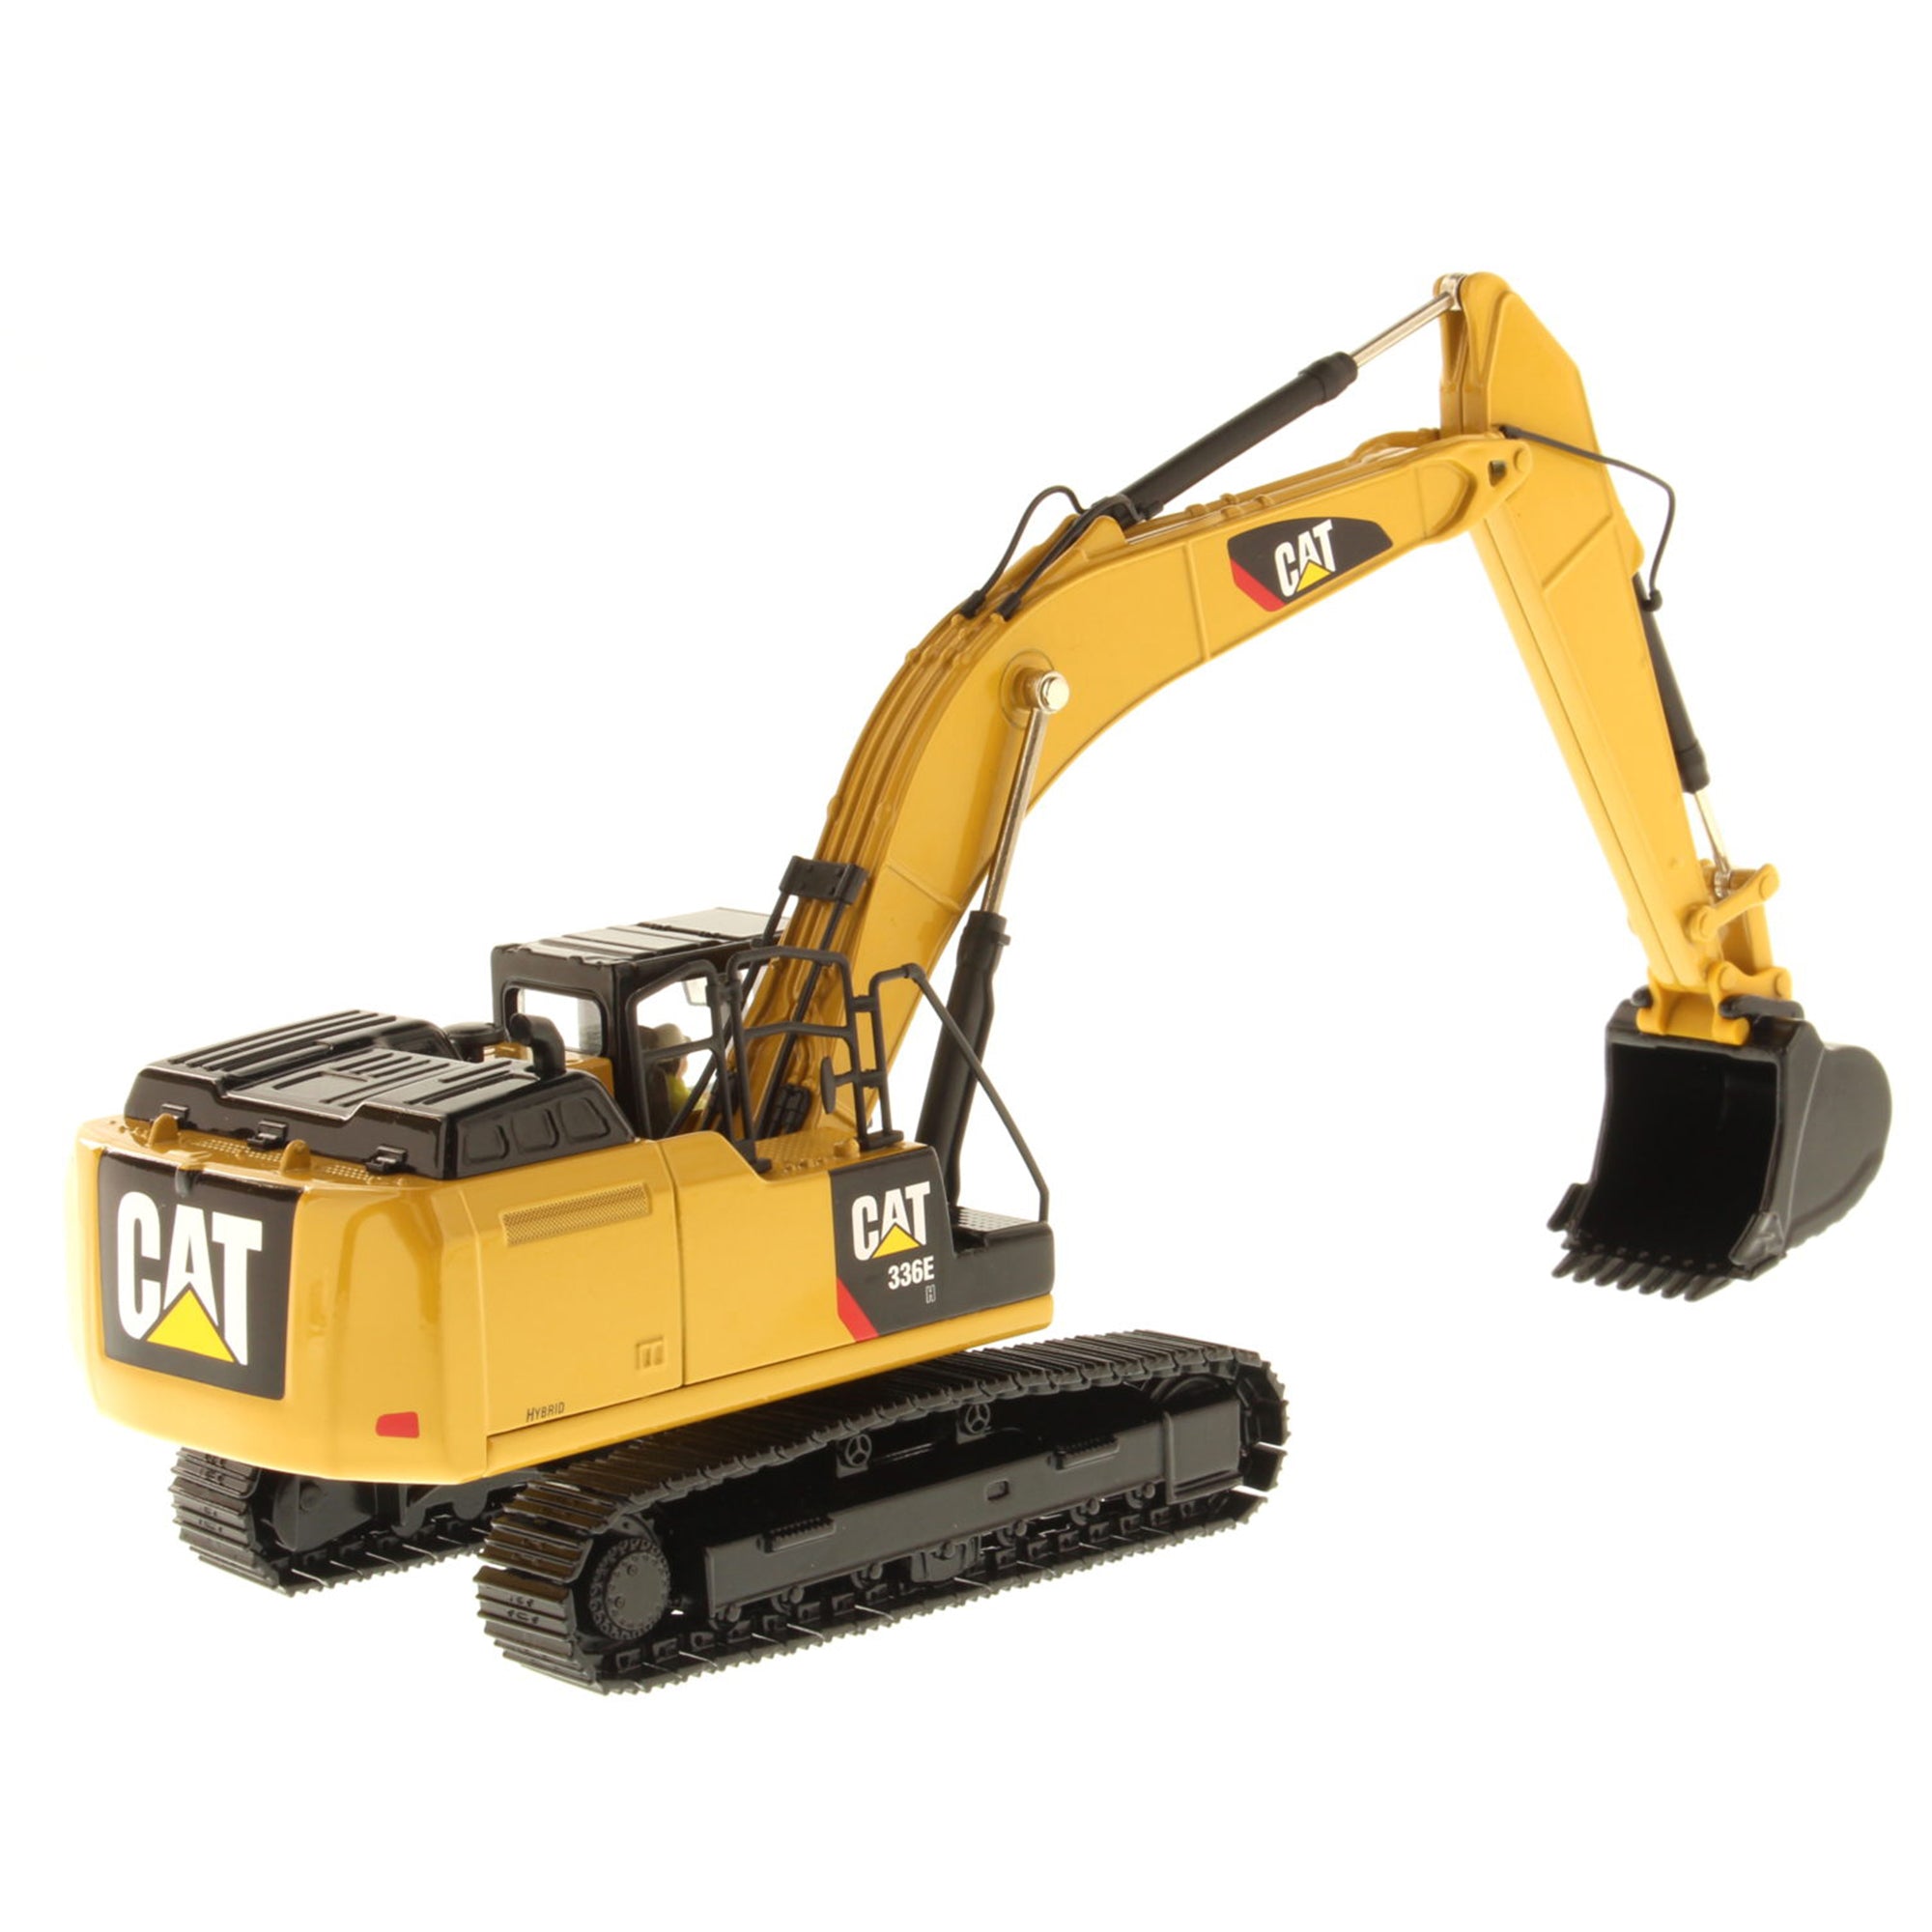 CAT Die Cast 336E H Hybrid Hydraulic Excavator 1:50